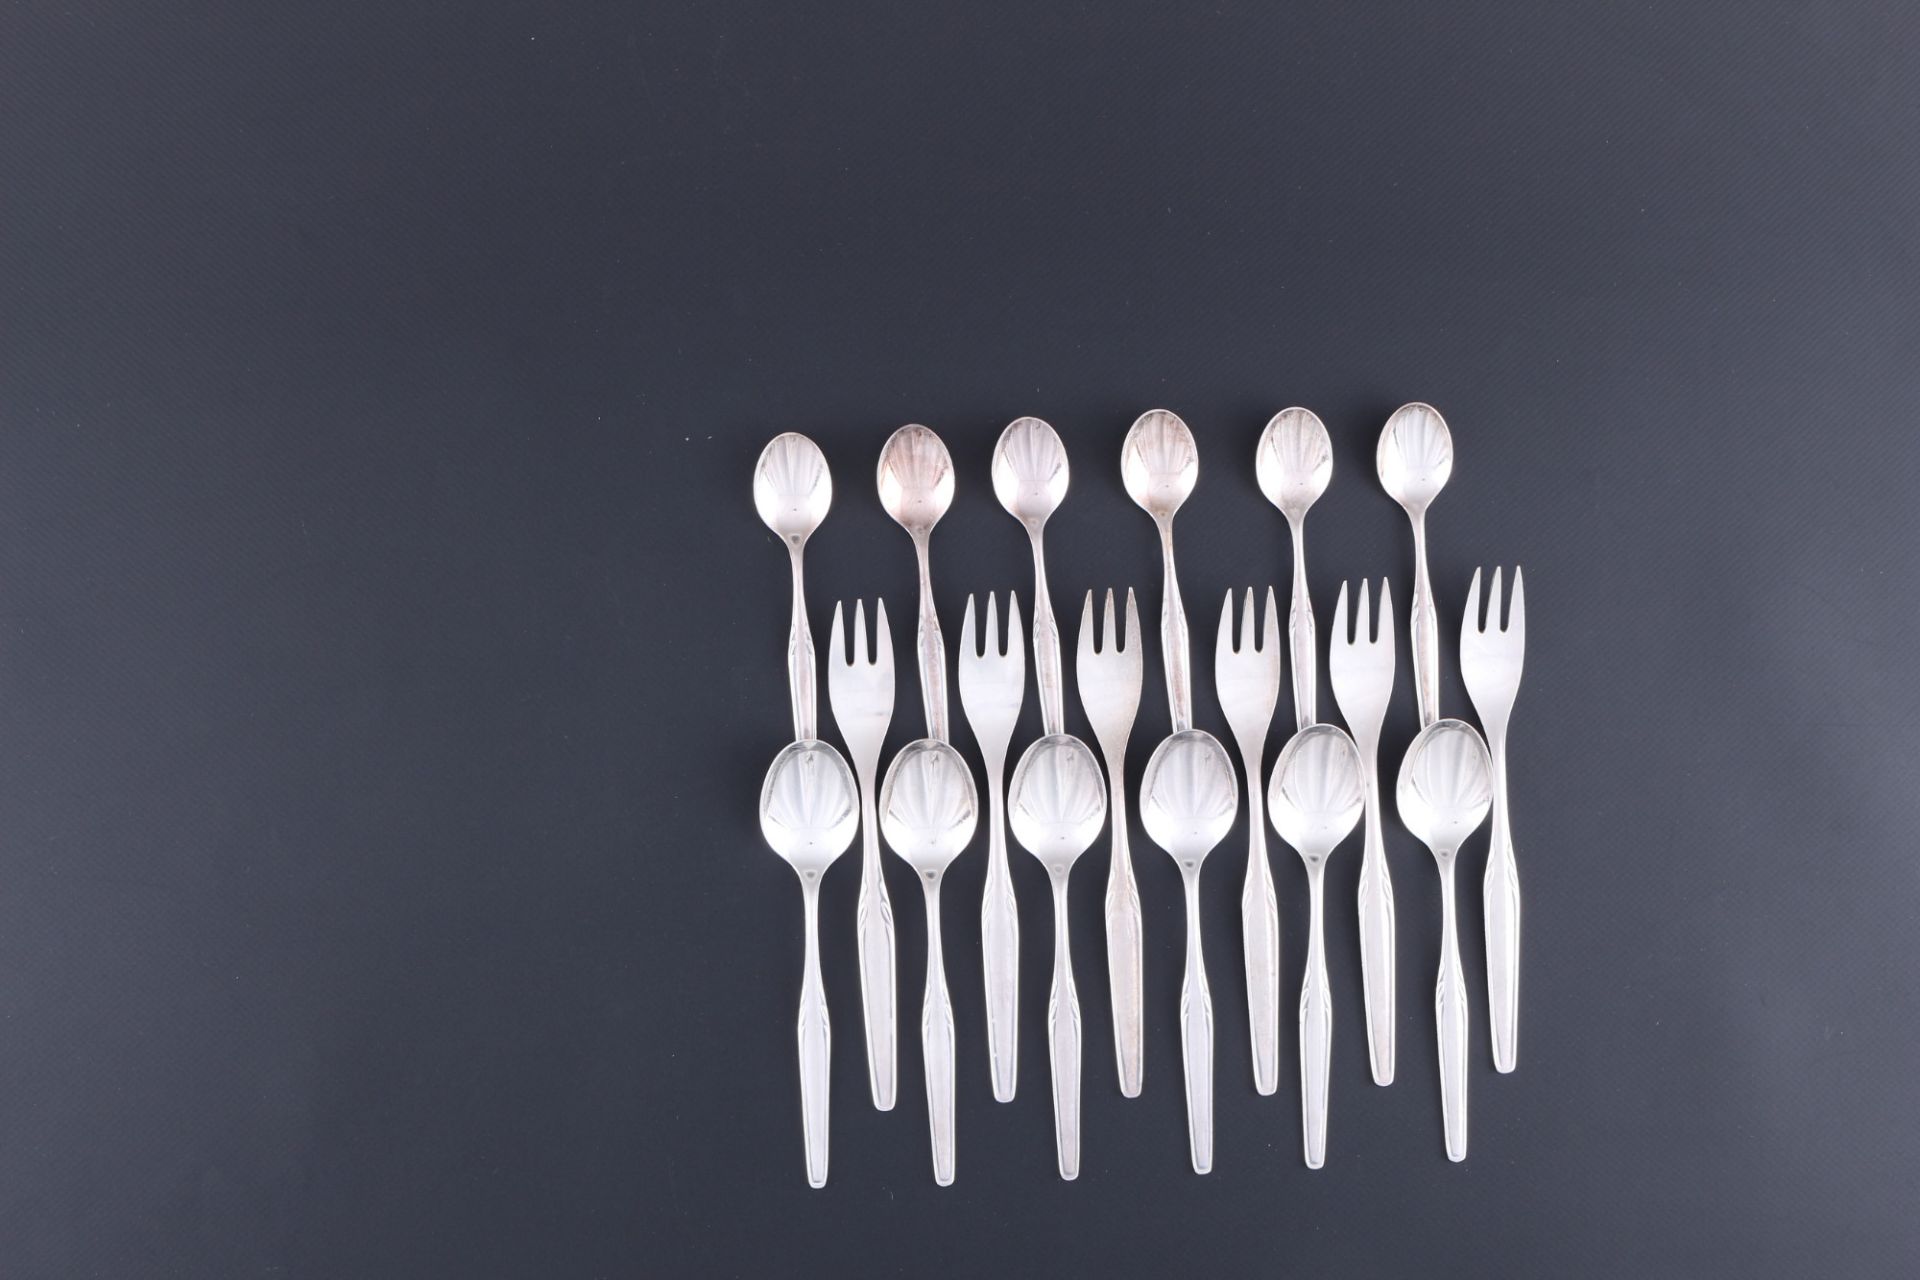 WMF Paris 800 silver cutlery for 6 persons, Silberbesteck für 6 Personen, - Image 4 of 5